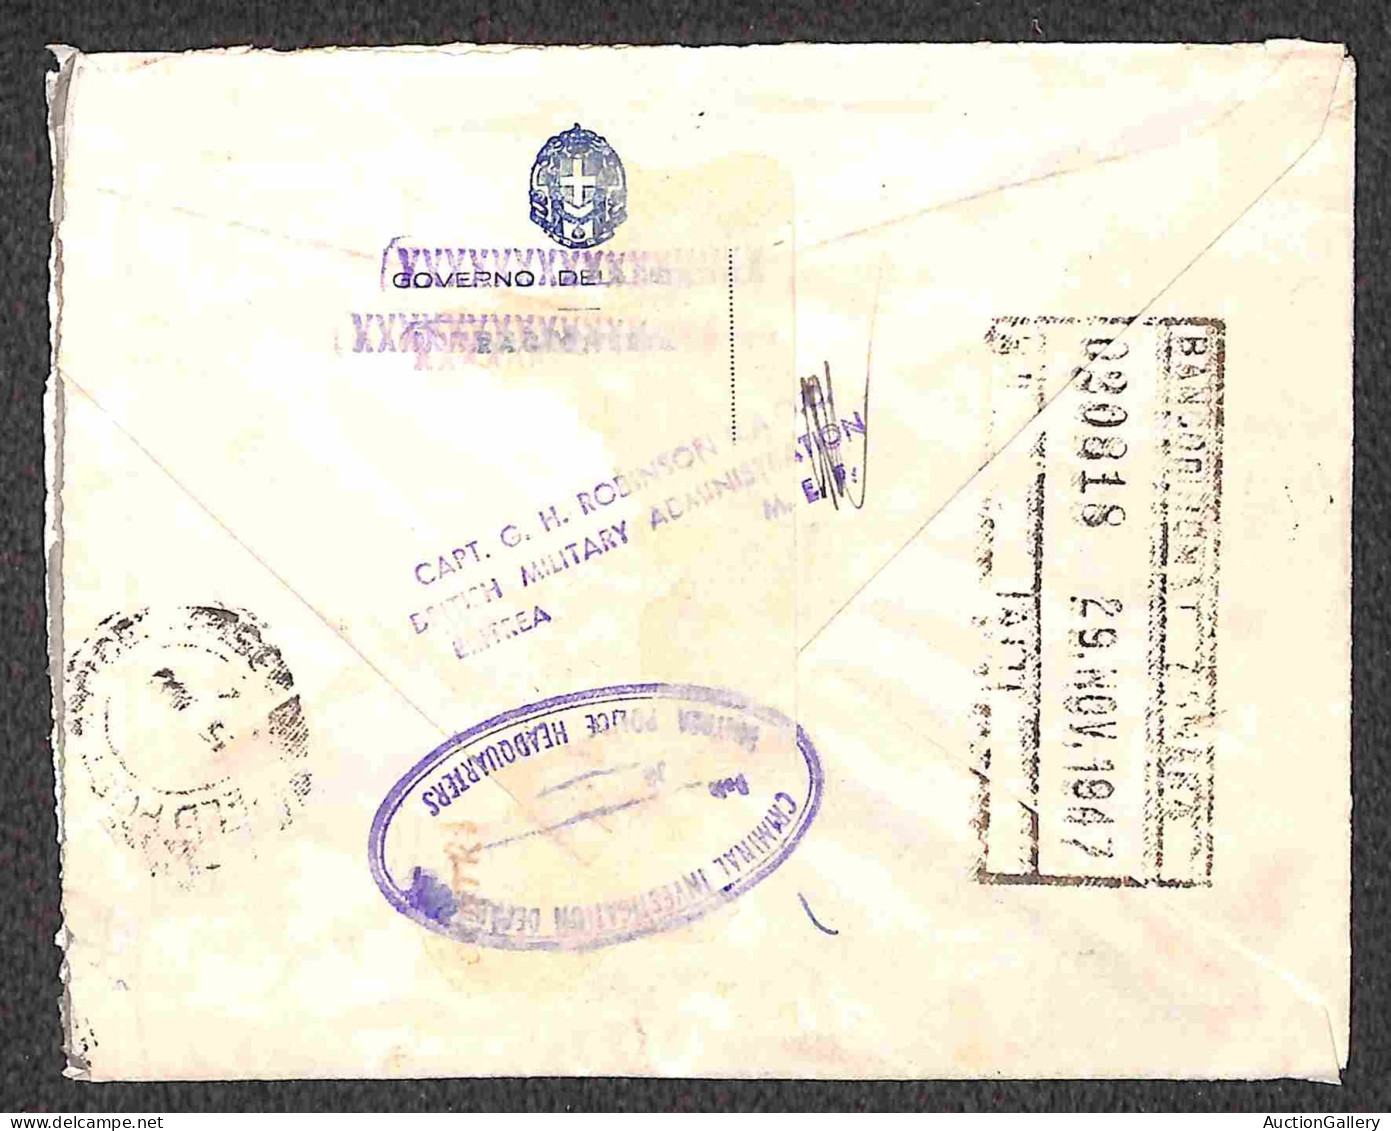 Europa - Gran Bretagna - 1946/1948 - Field Post - Cinque buste in franchigia per Asmara